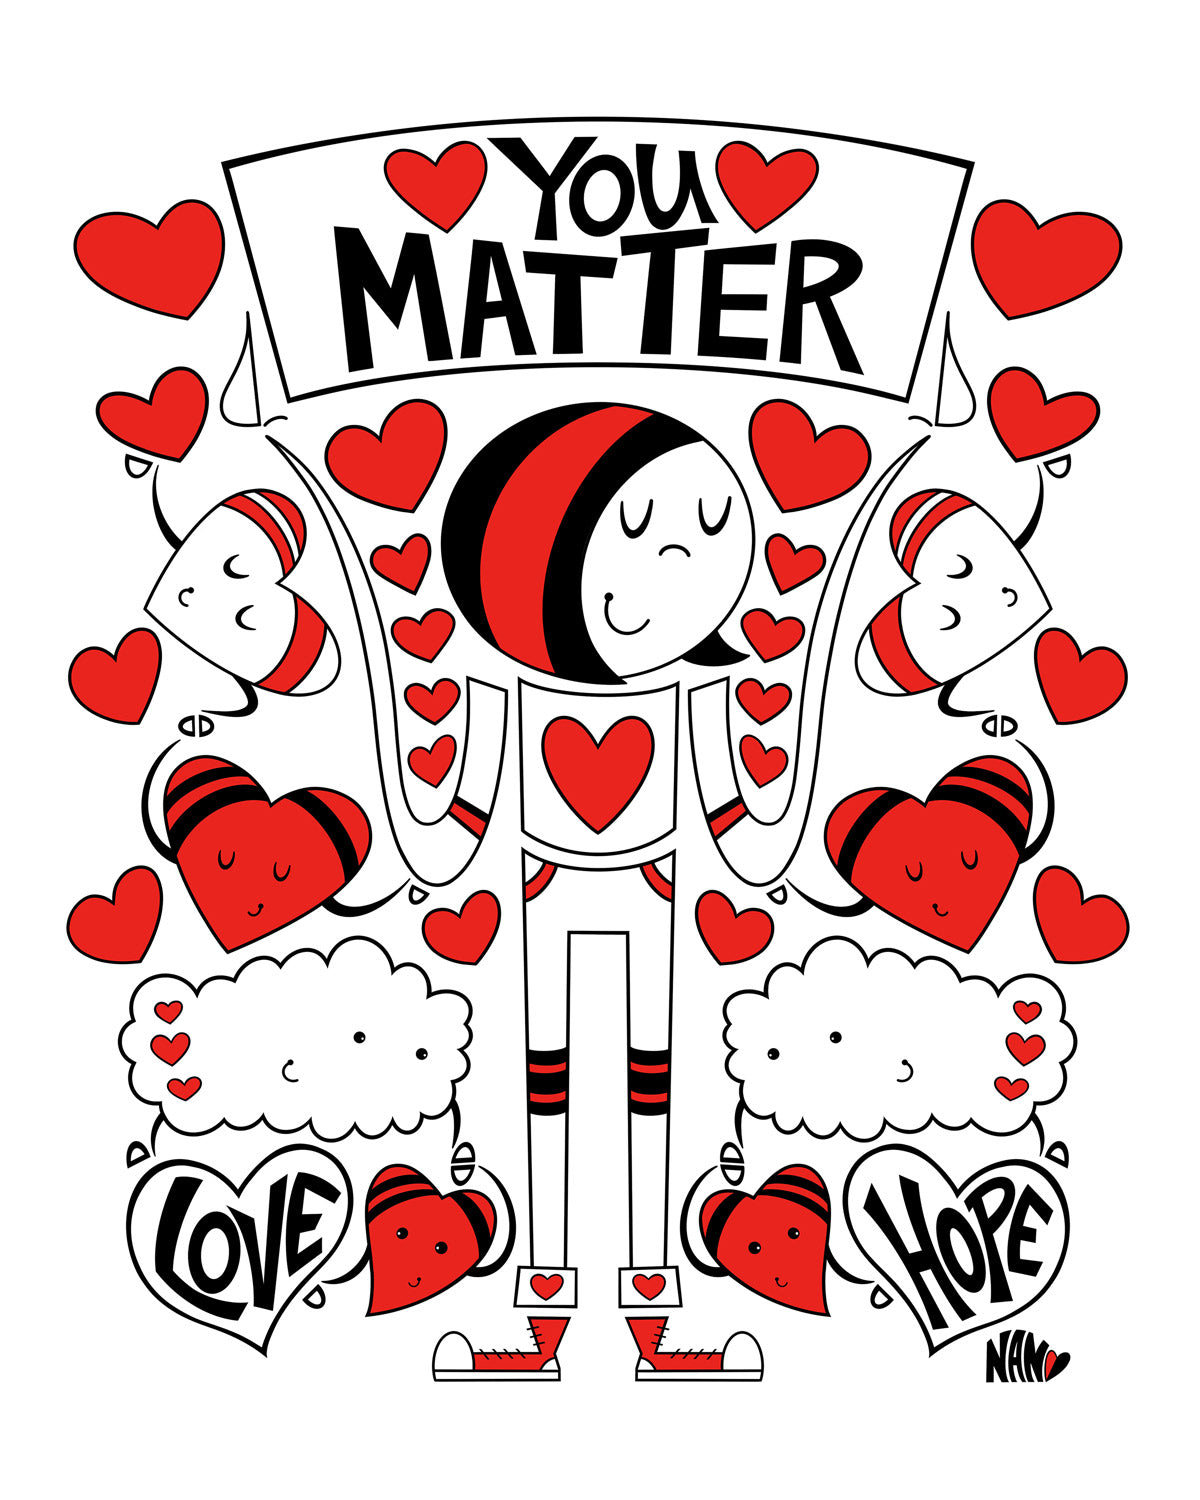 You Matter - Print